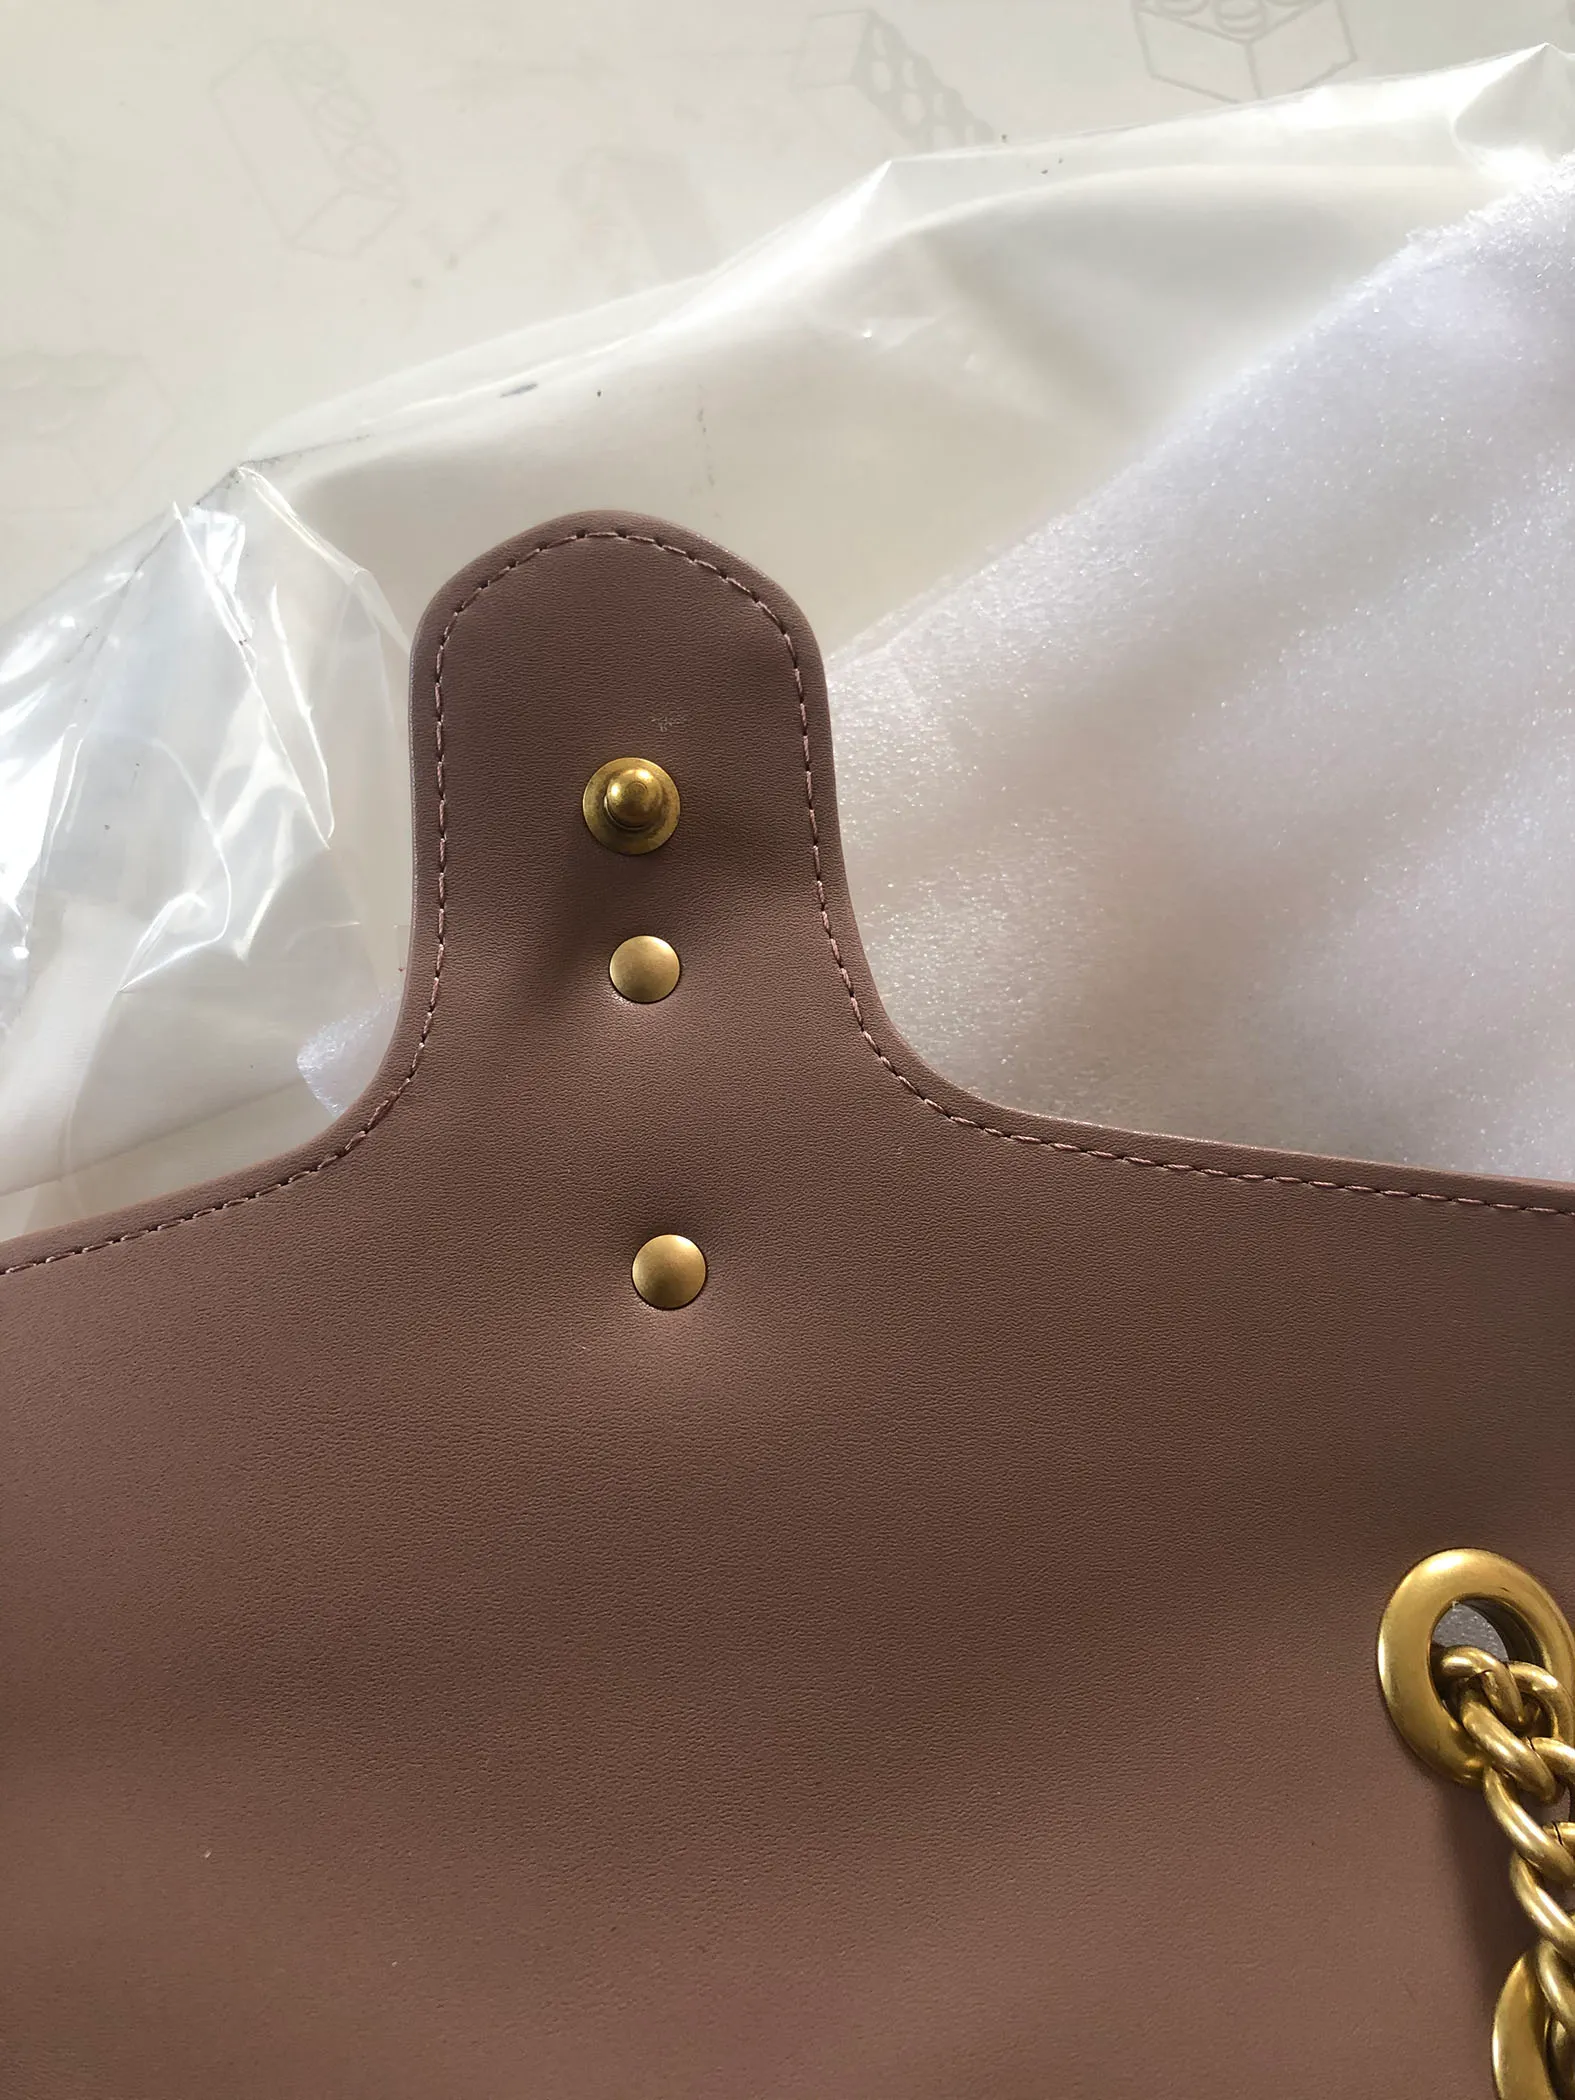 Top Quality Handbags Wallet Handbag Women Handbags Bags Crossbody Soho Bag Disco Shoulder Bag Fringed Messenger Bags Purse 31cm